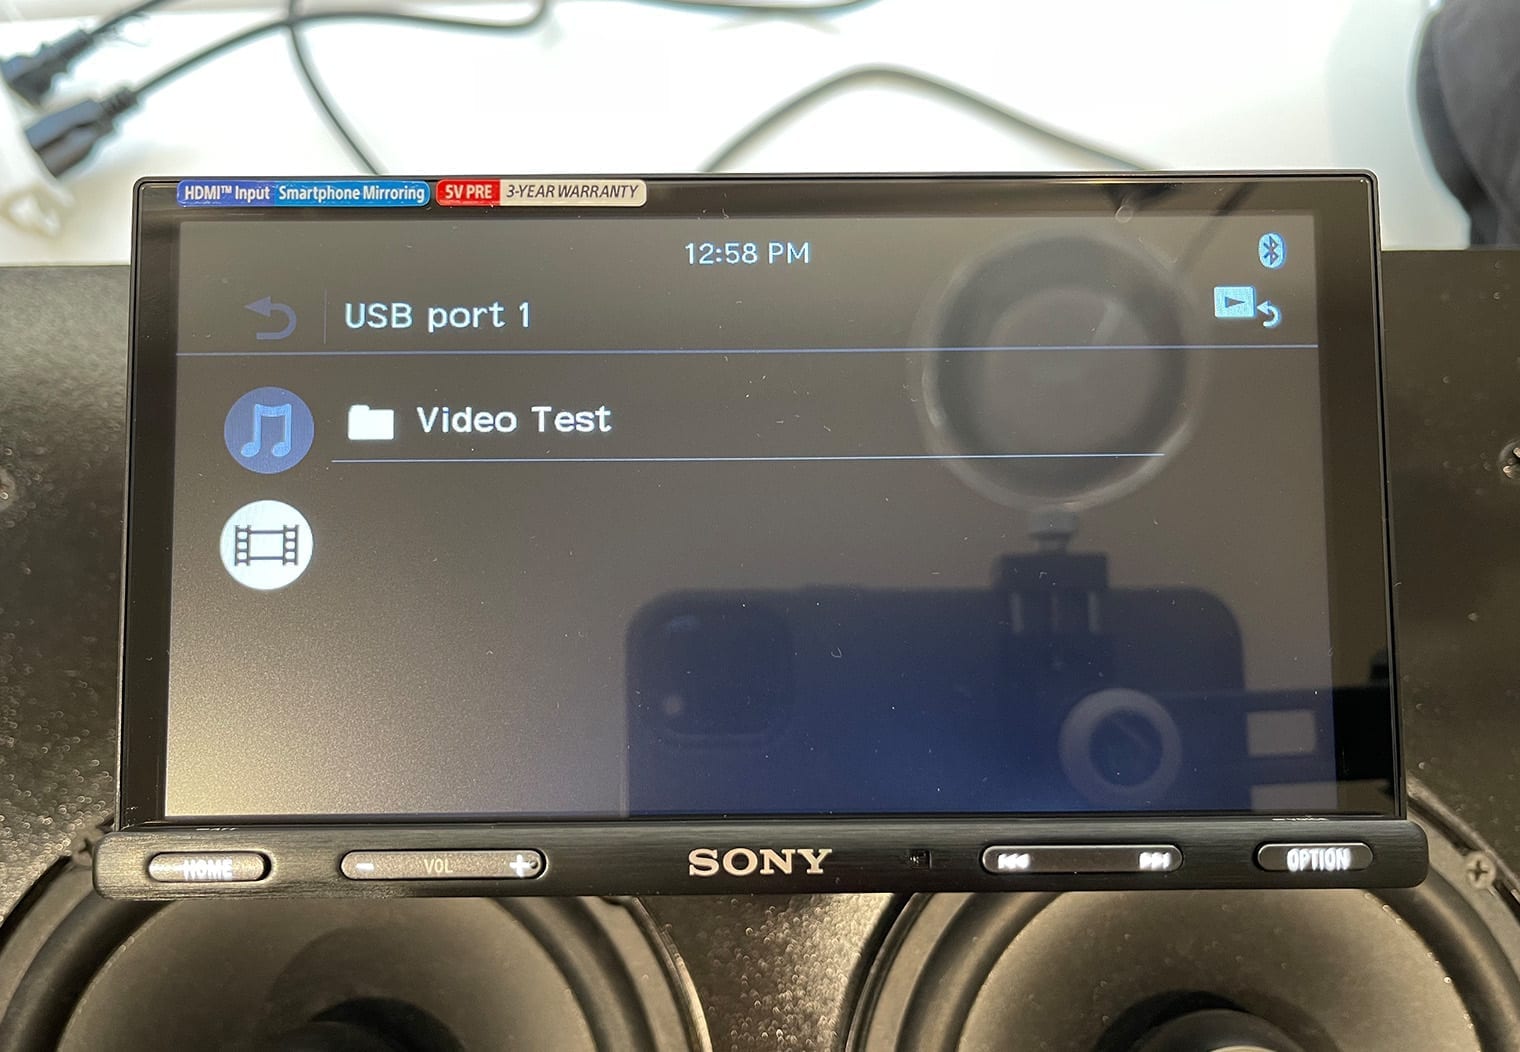 Sony XAV-AX5600 usb root